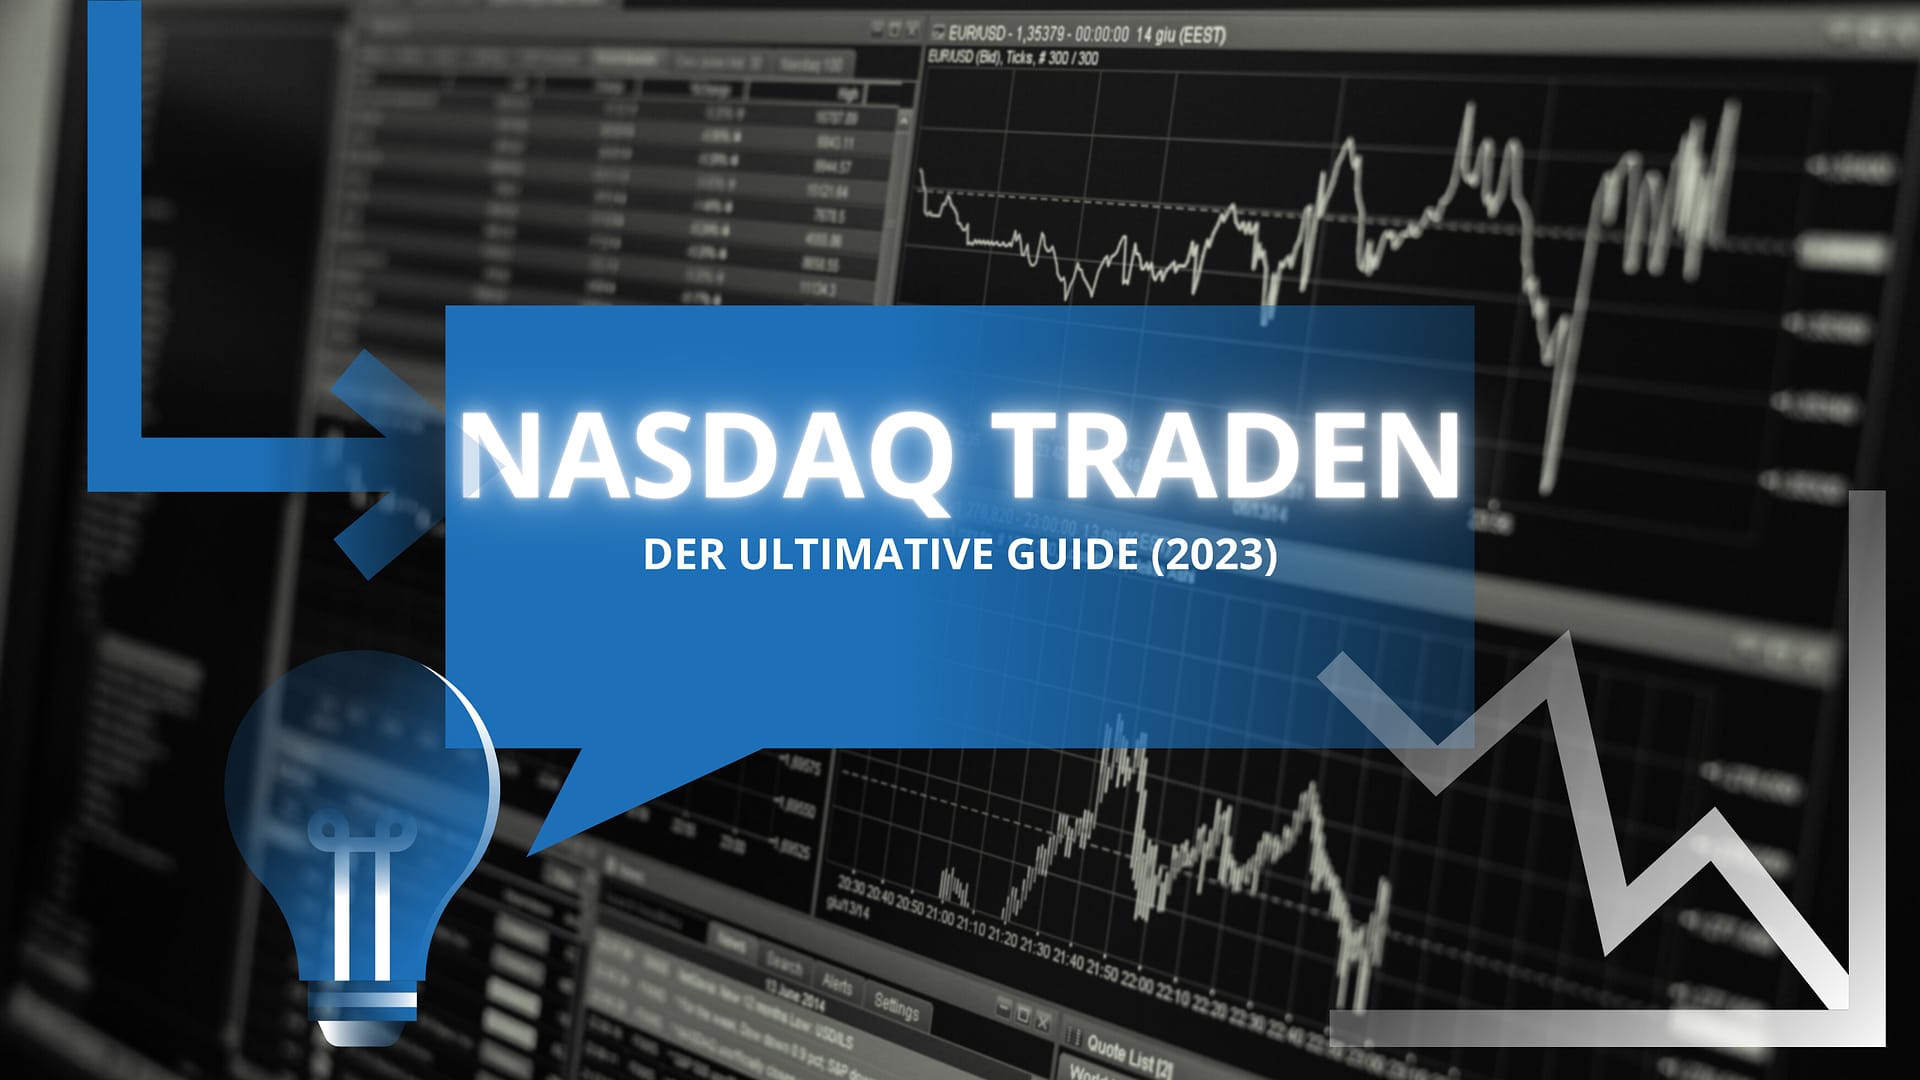 Nasdaq traden – Der ultimative Guide (2023)